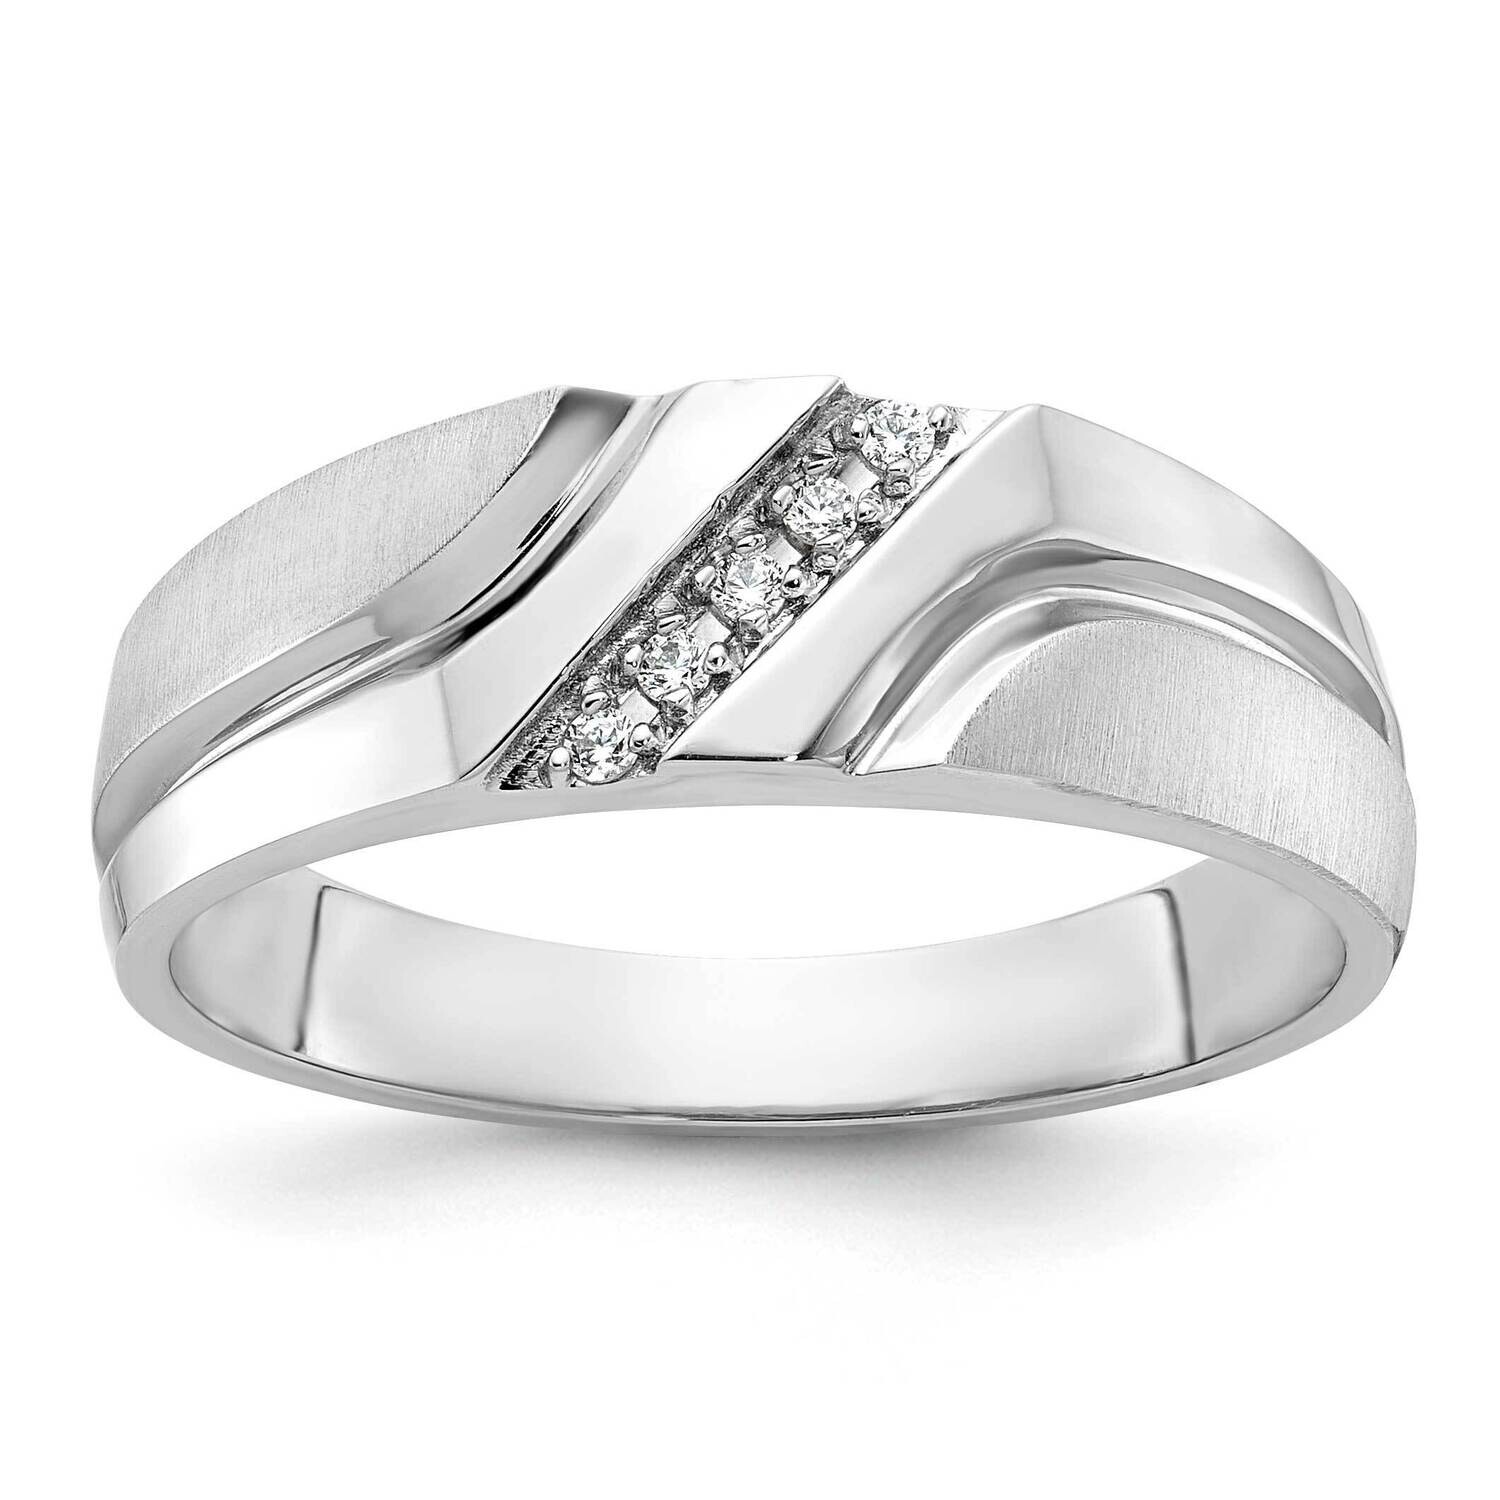 Ibgoodman Men's Polished Satin Grooved 5-Stone 1/20 Carat A Quality Diamond Ring 10k White Gold B64202-0WA